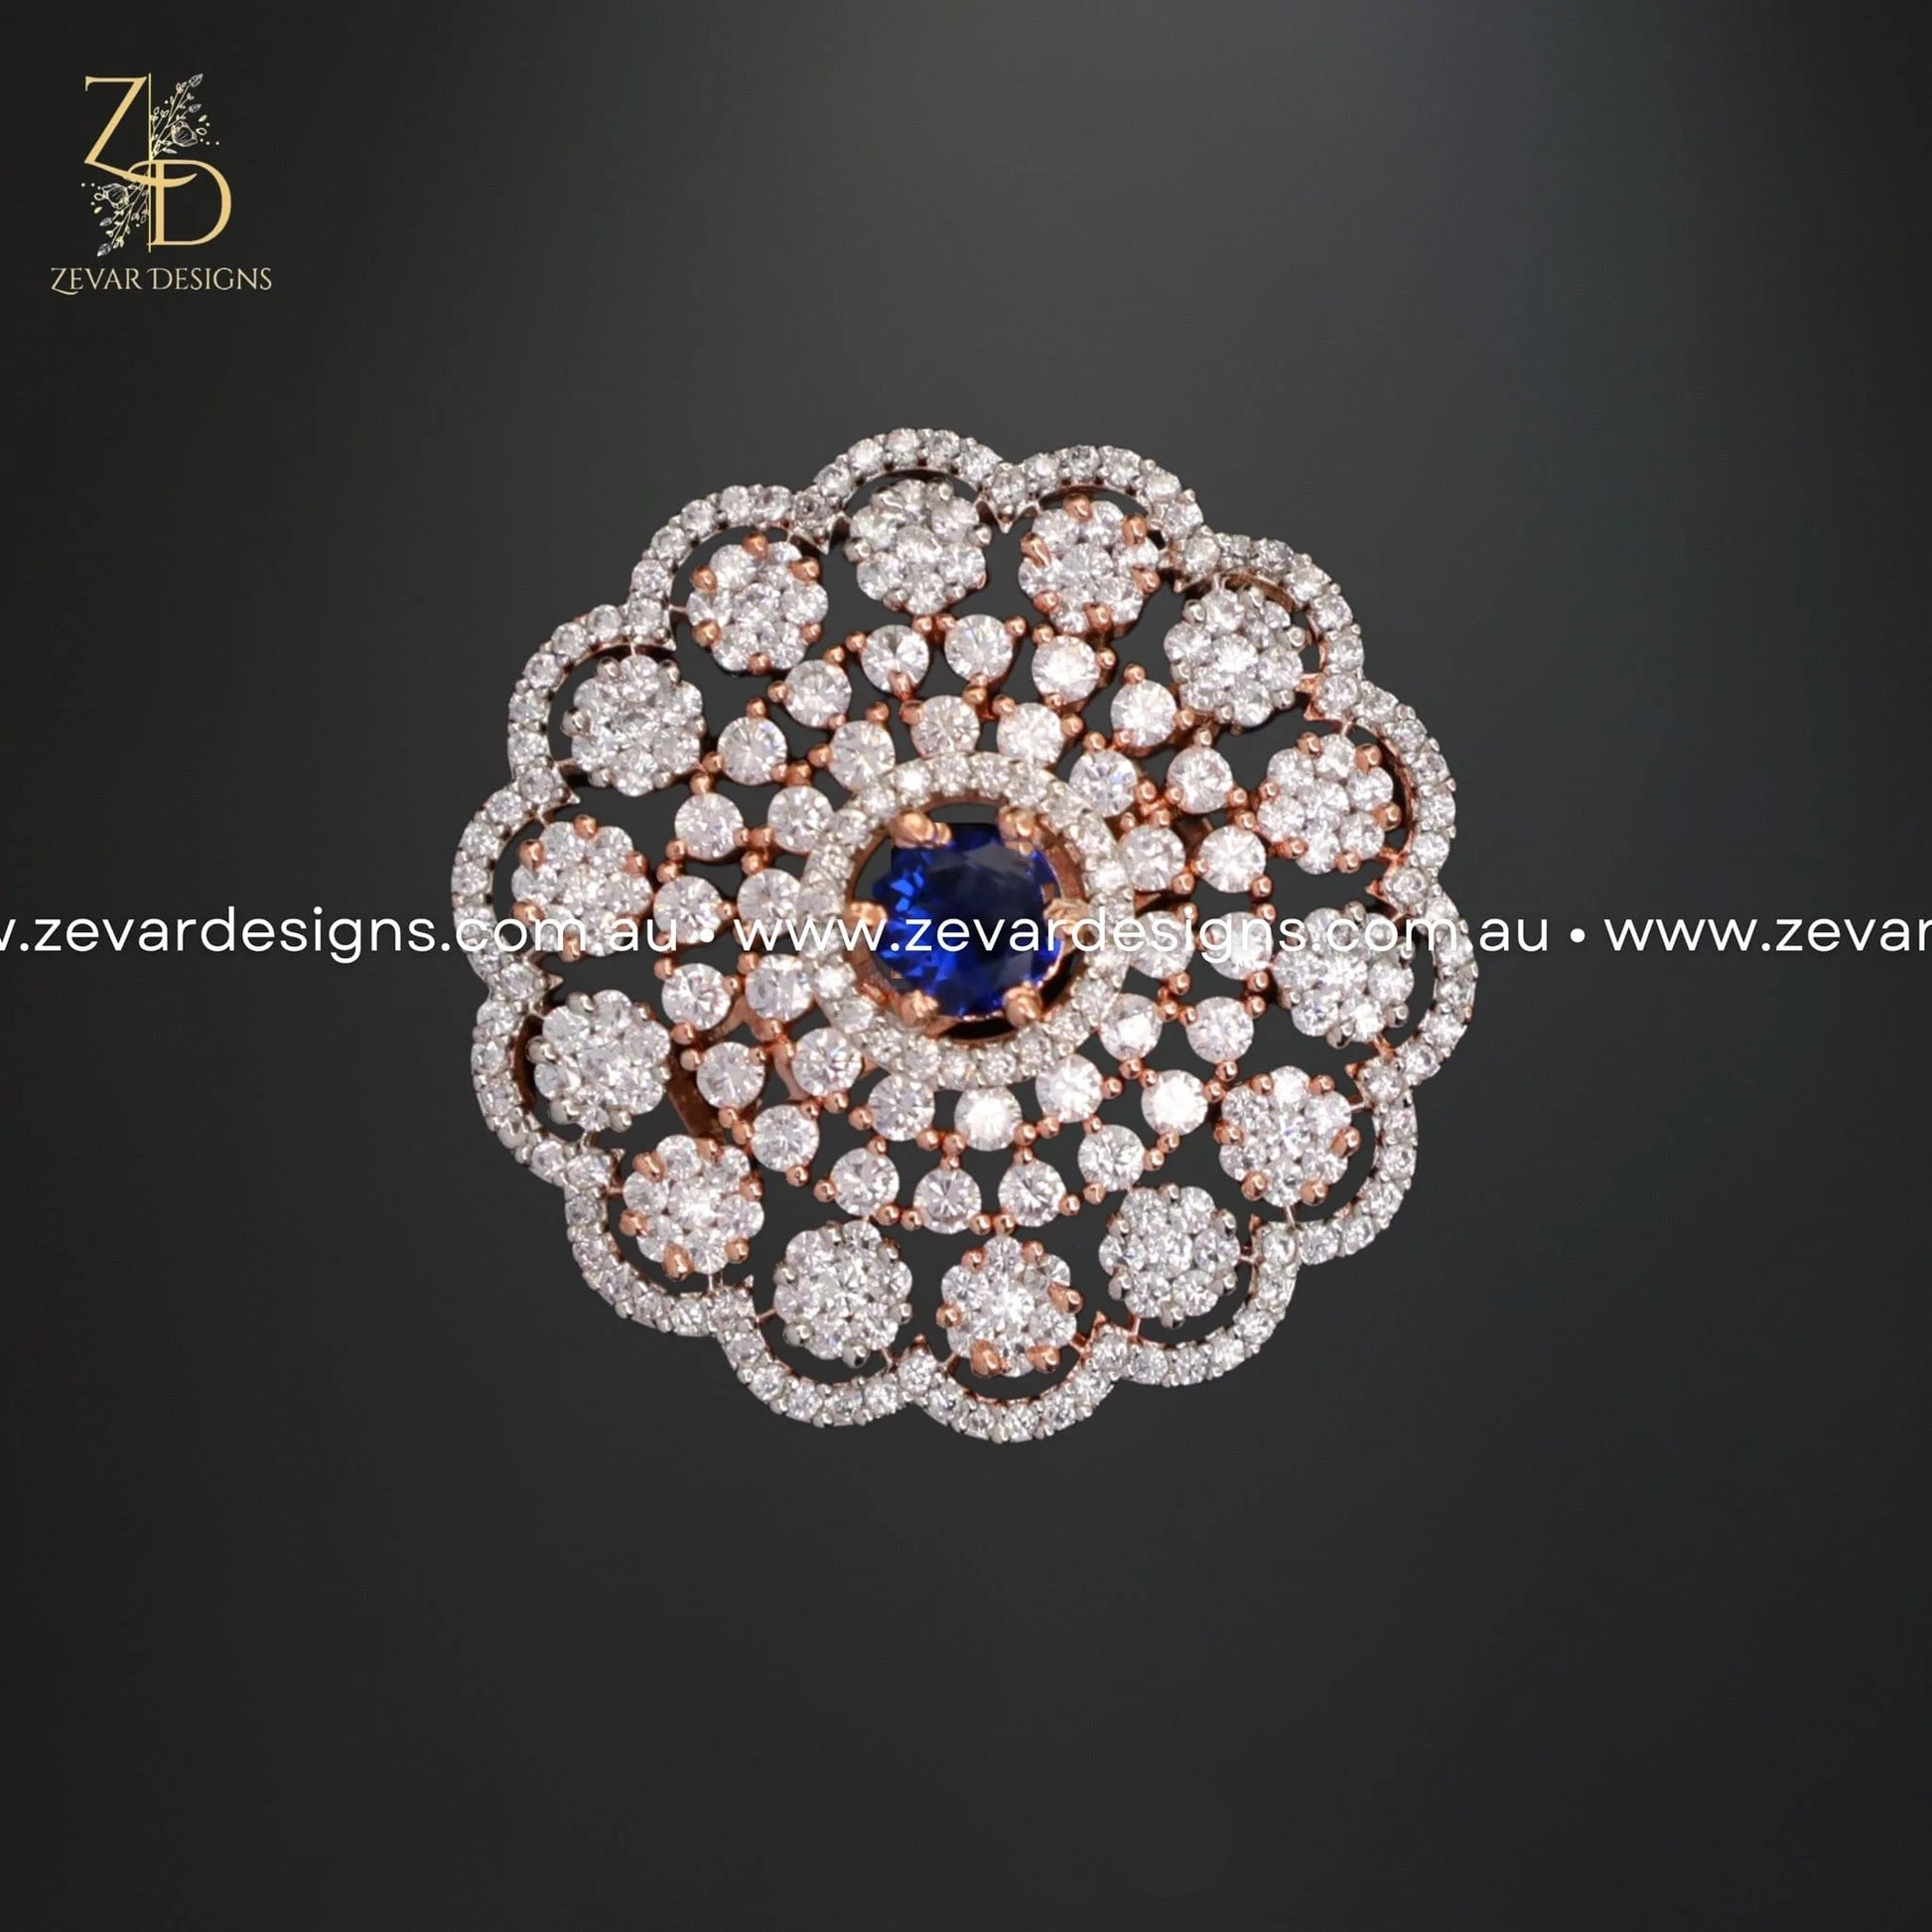 Zevar Designs Rings - AD AD/Zircon Ring in Rose Gold - Sapphire Blue